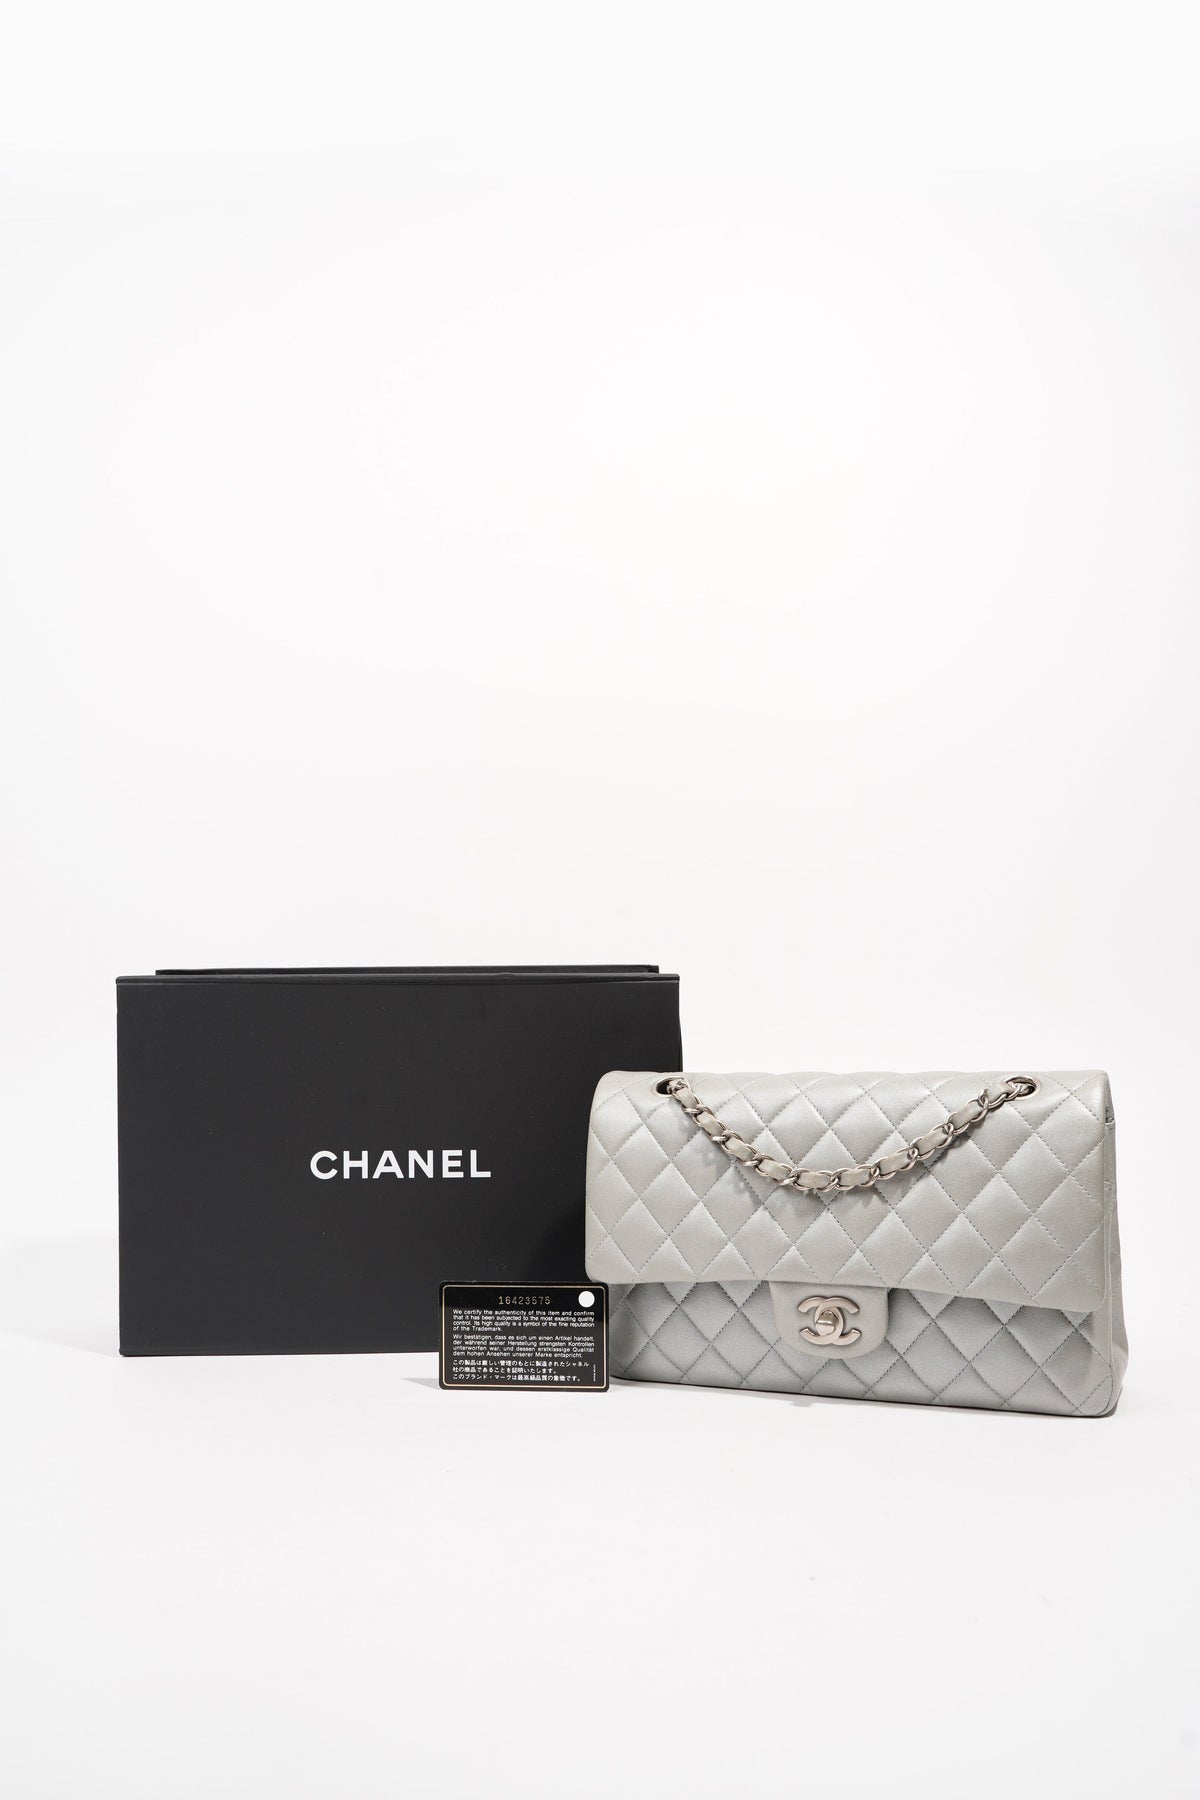 Chanel Classic Flap Shoulder Bag, Black Lambskin, Mini